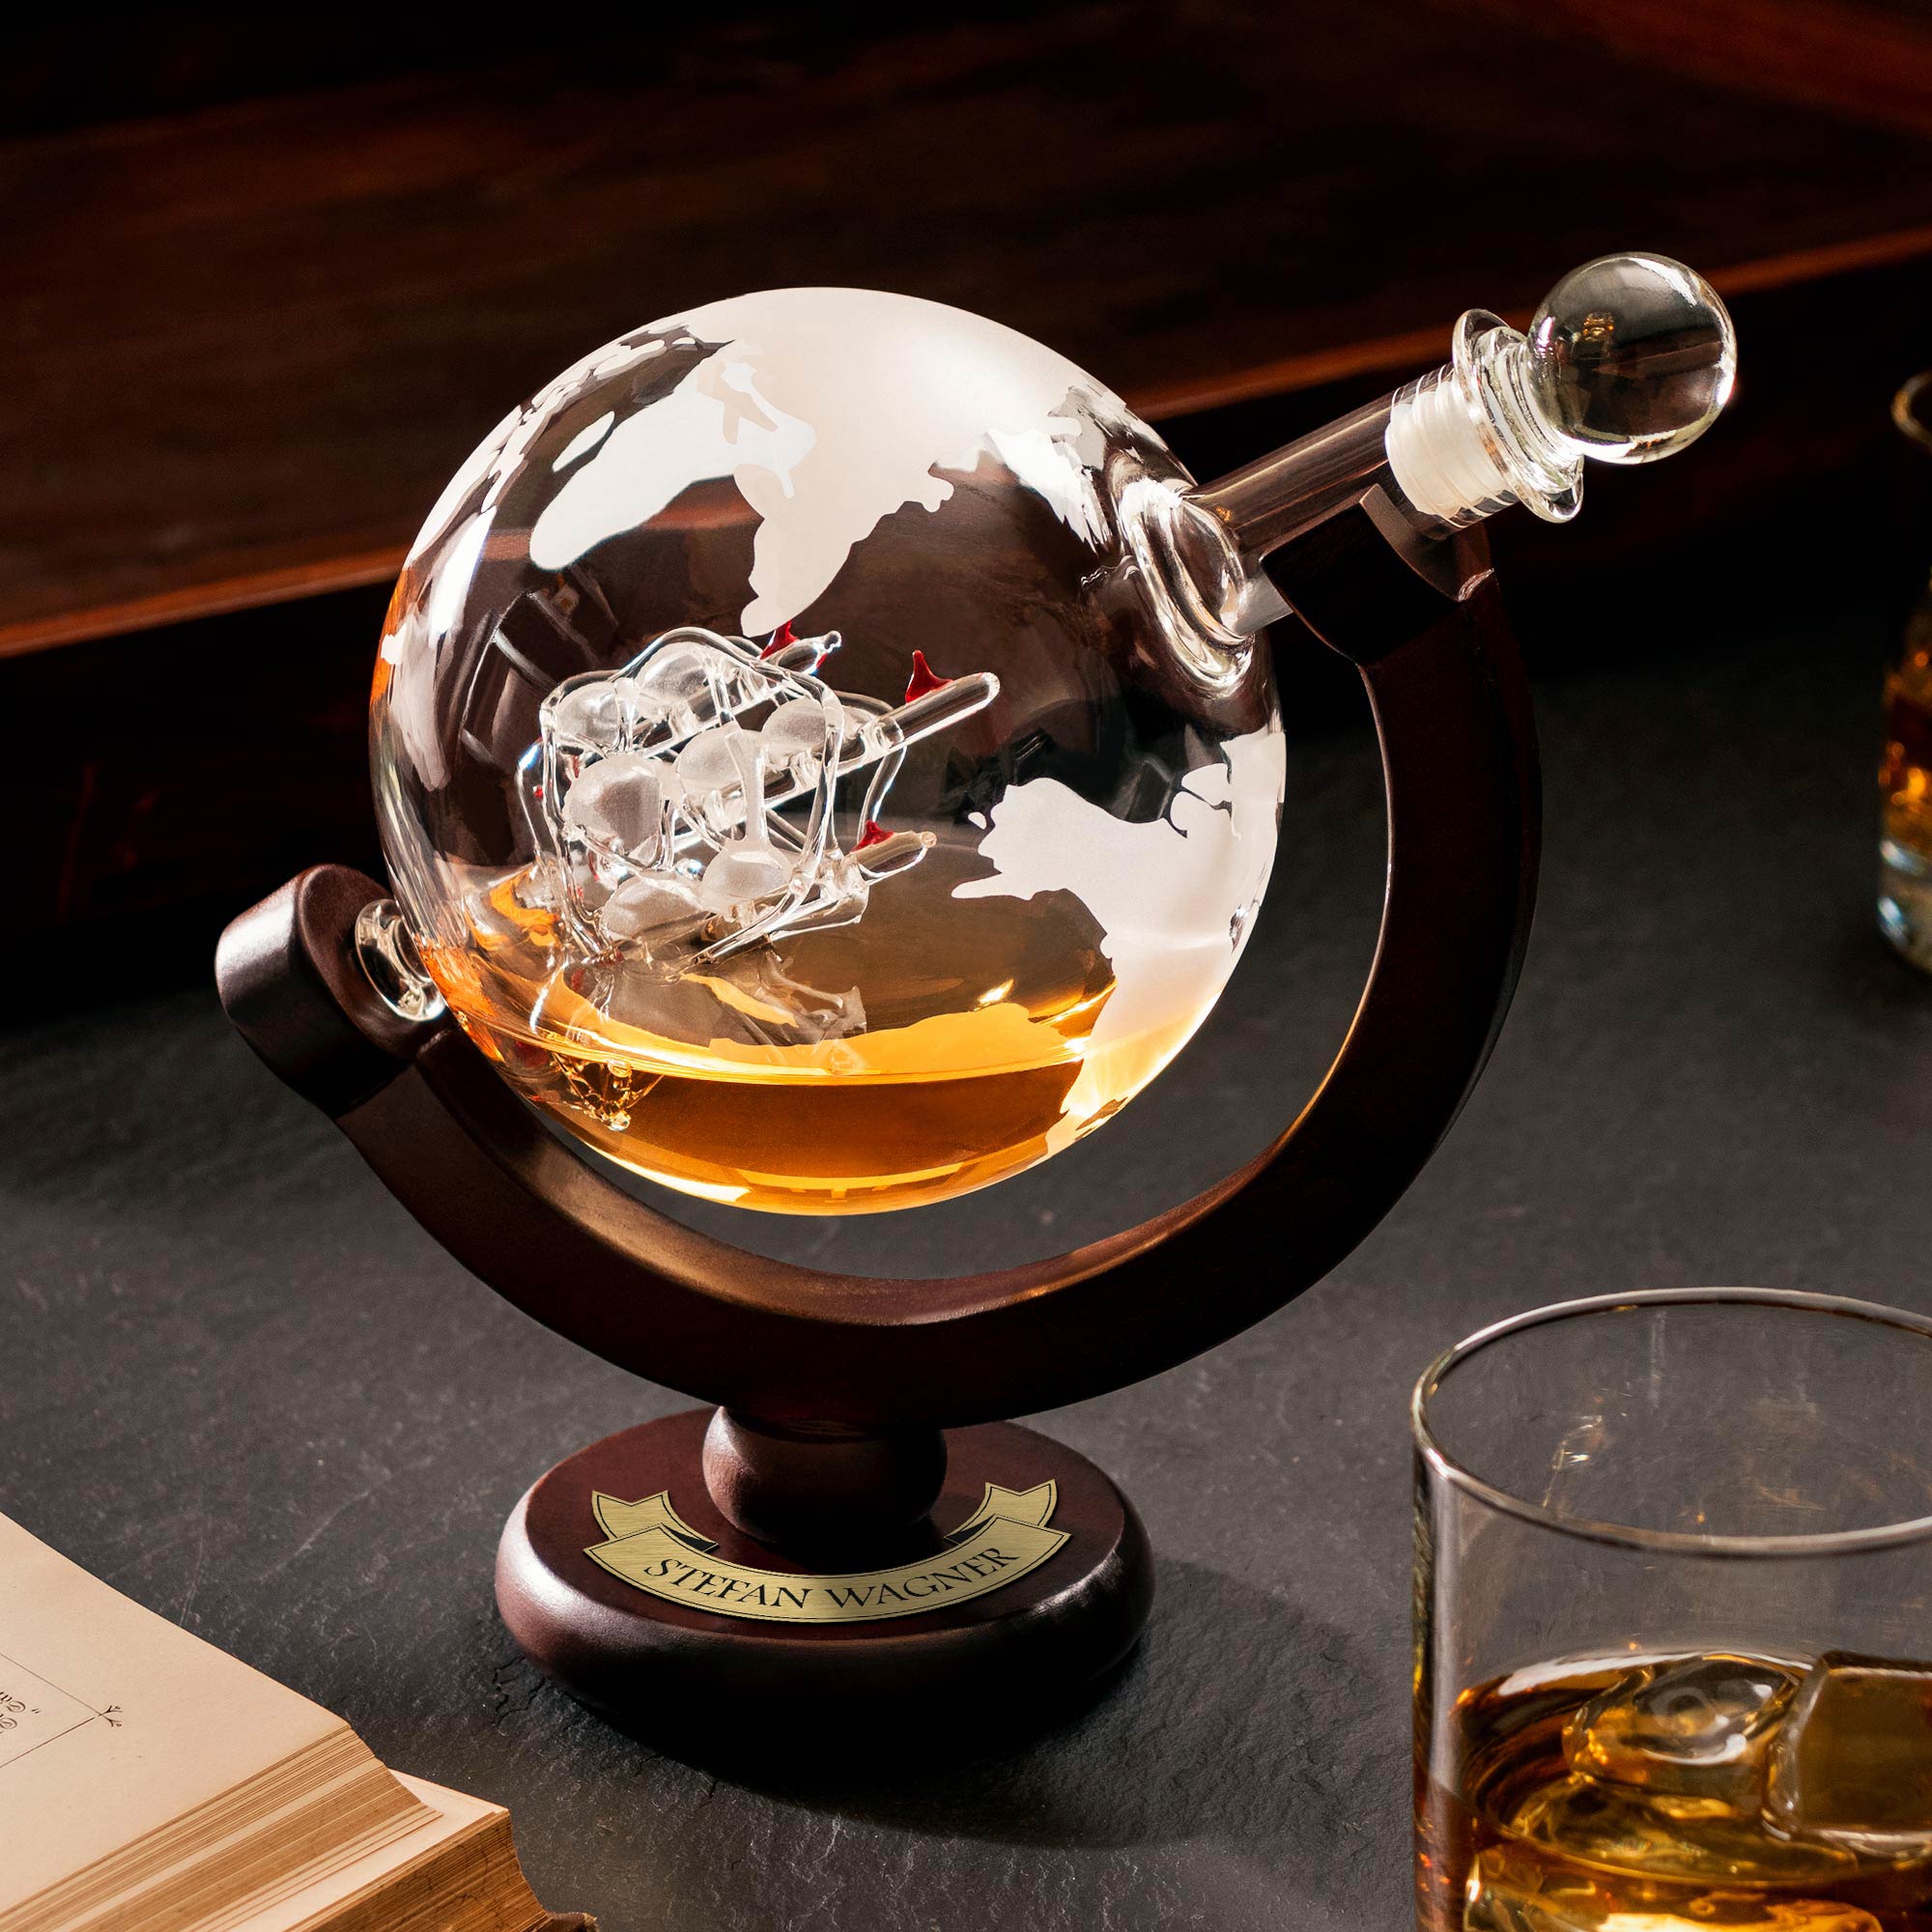 Whiskykaraffe - Globus Schiff - Namensplakette